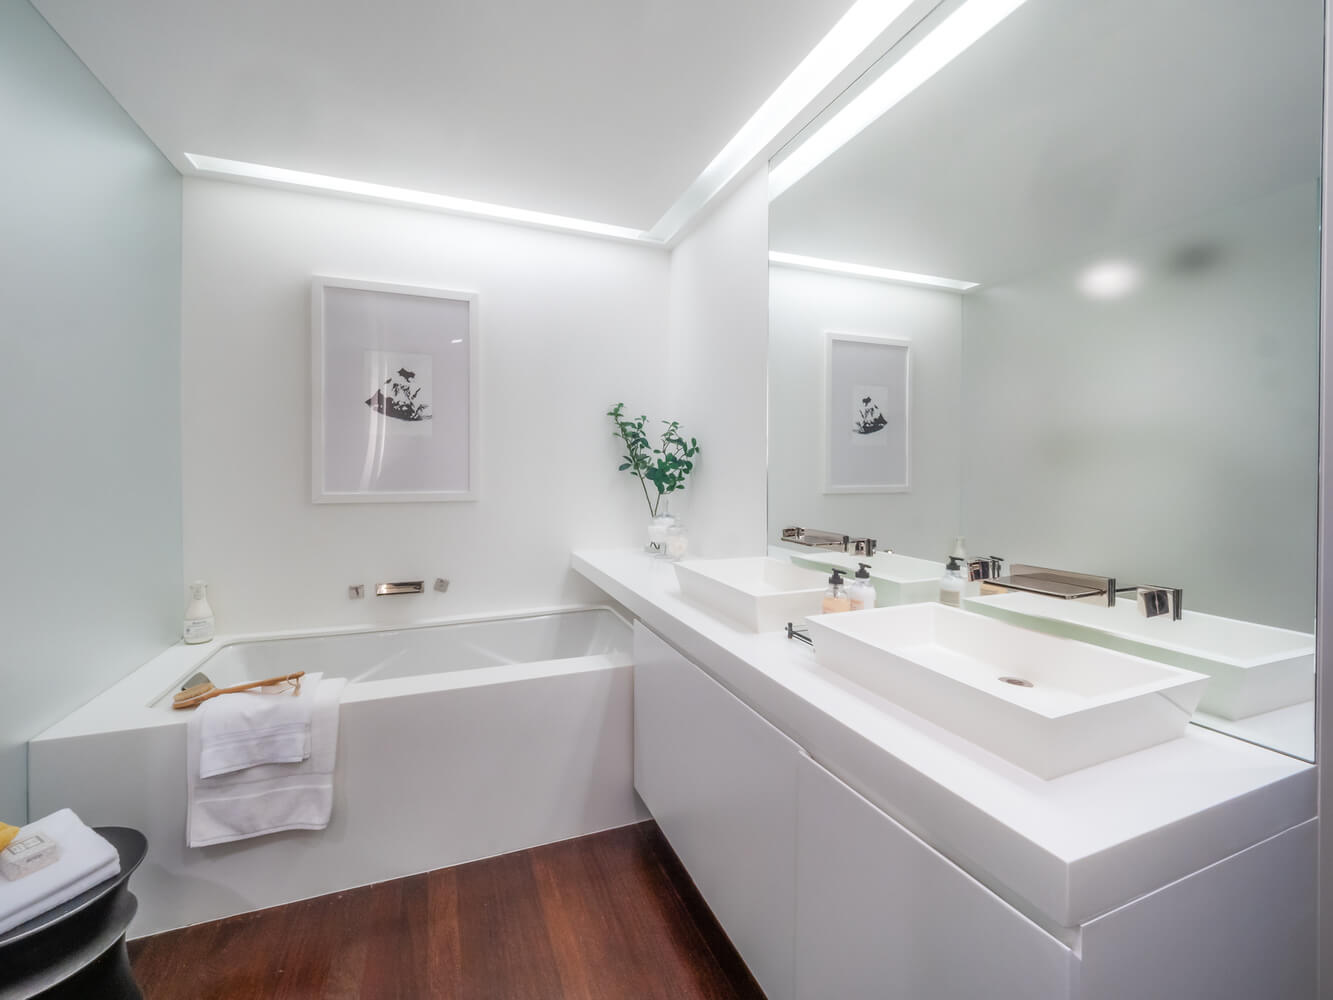 Karolina Kurkova's Tribeca apartment for sale in Manhattan, NYC - The Best celebrity bathrooms